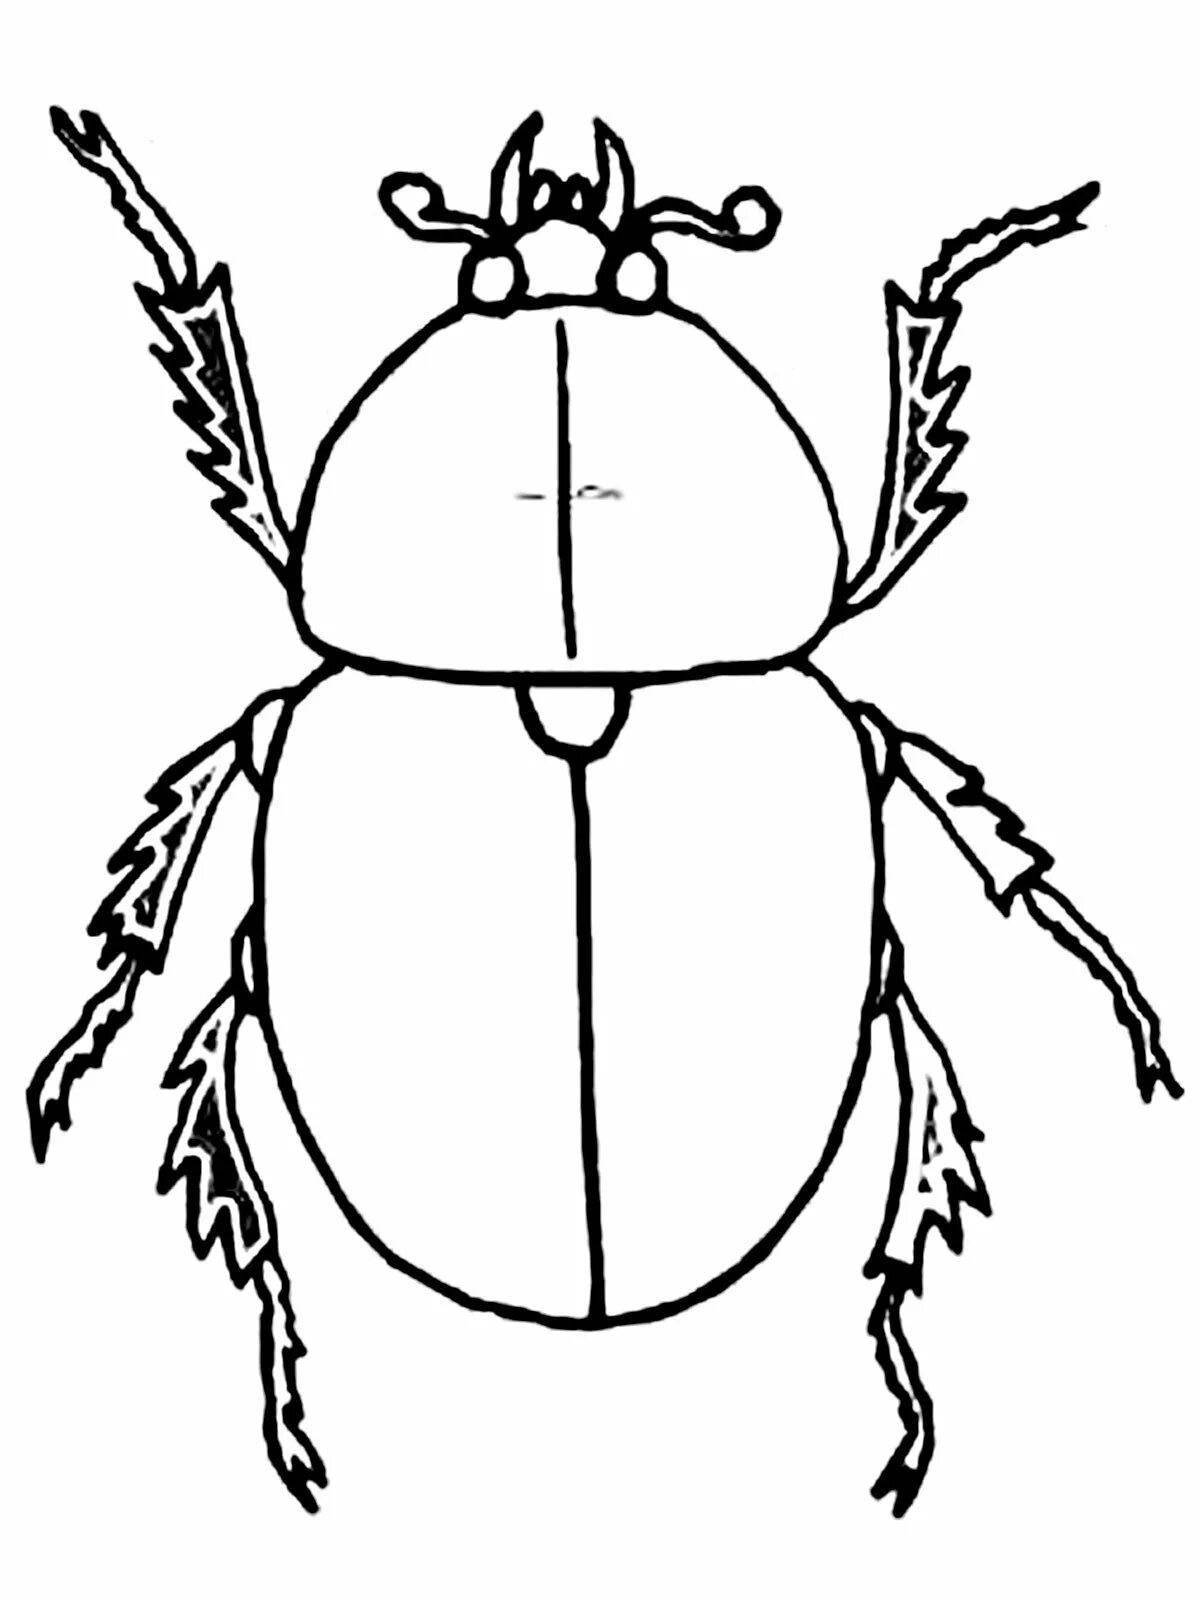 Fun beetle coloring book for kids